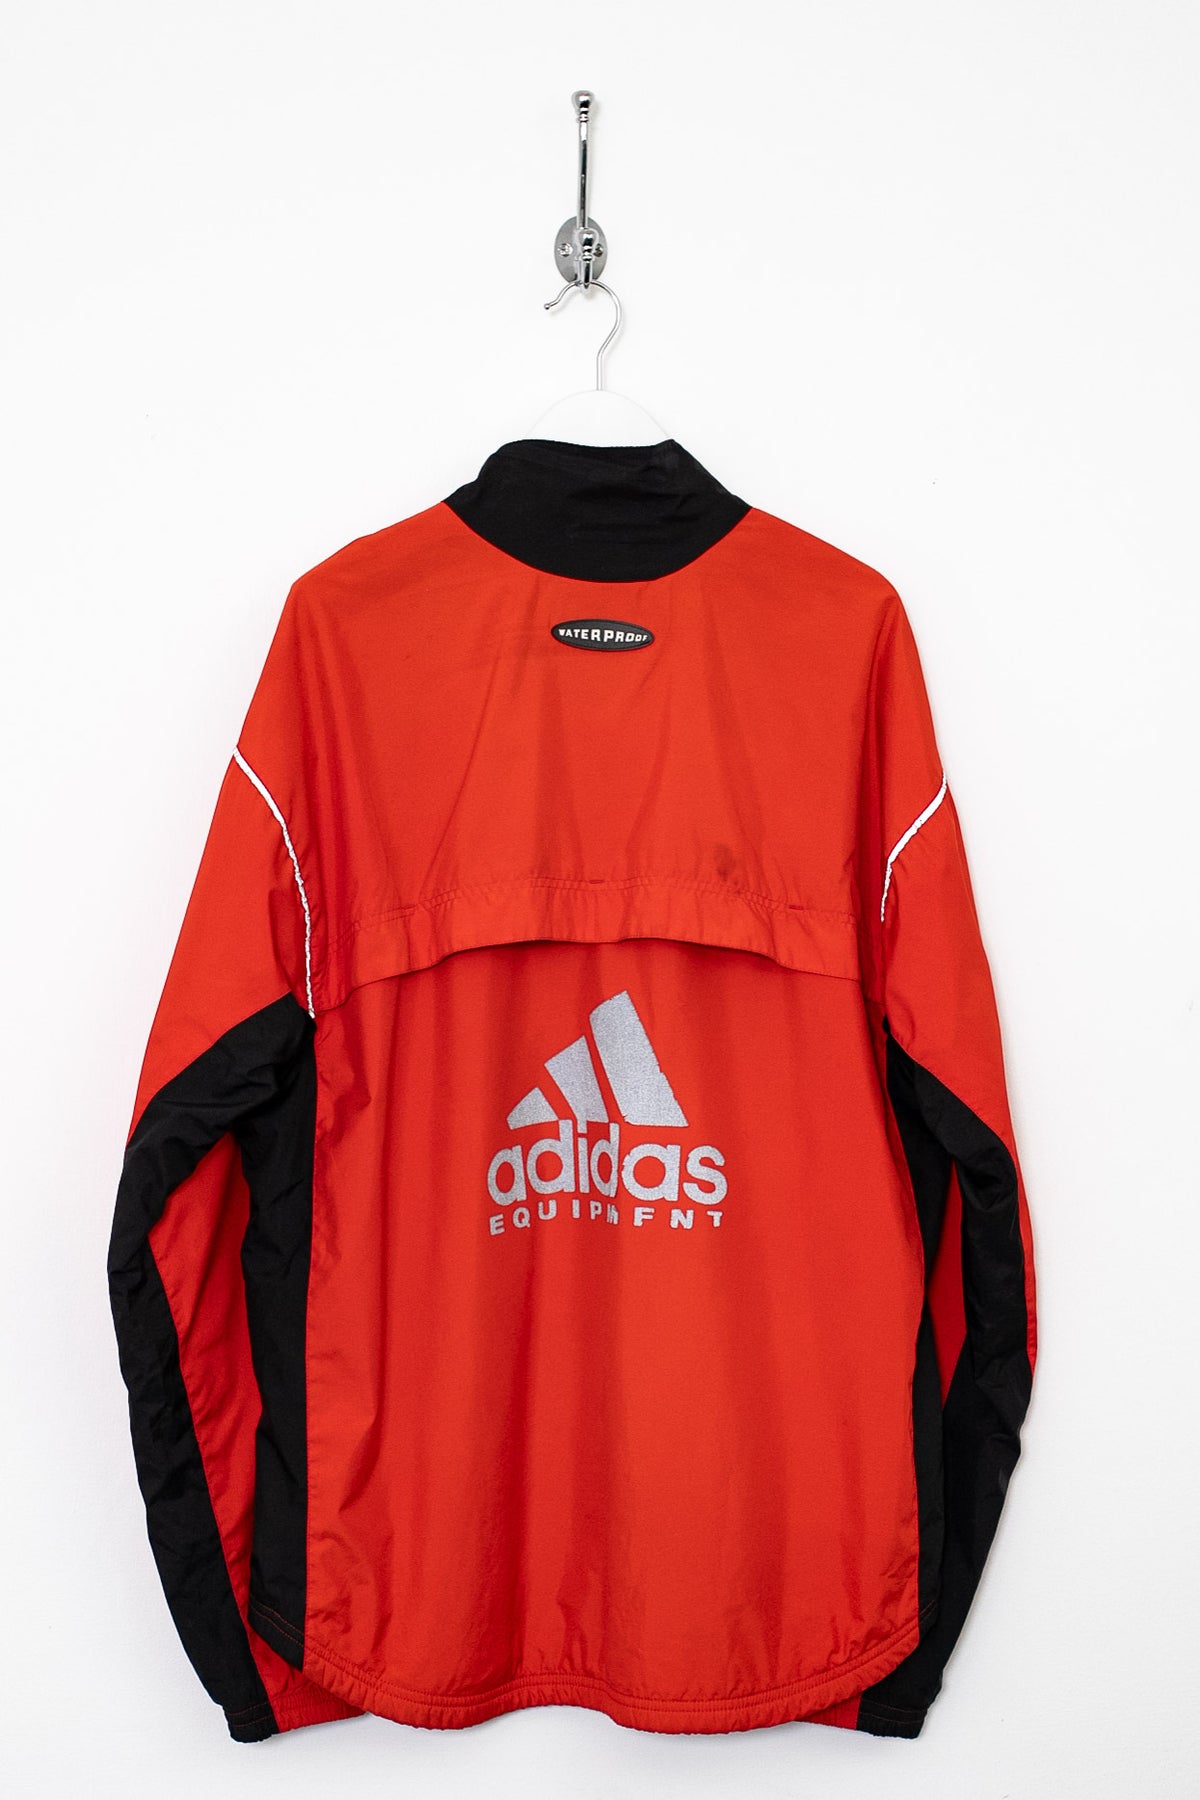 00s Adidas Equipment Jacket (M)